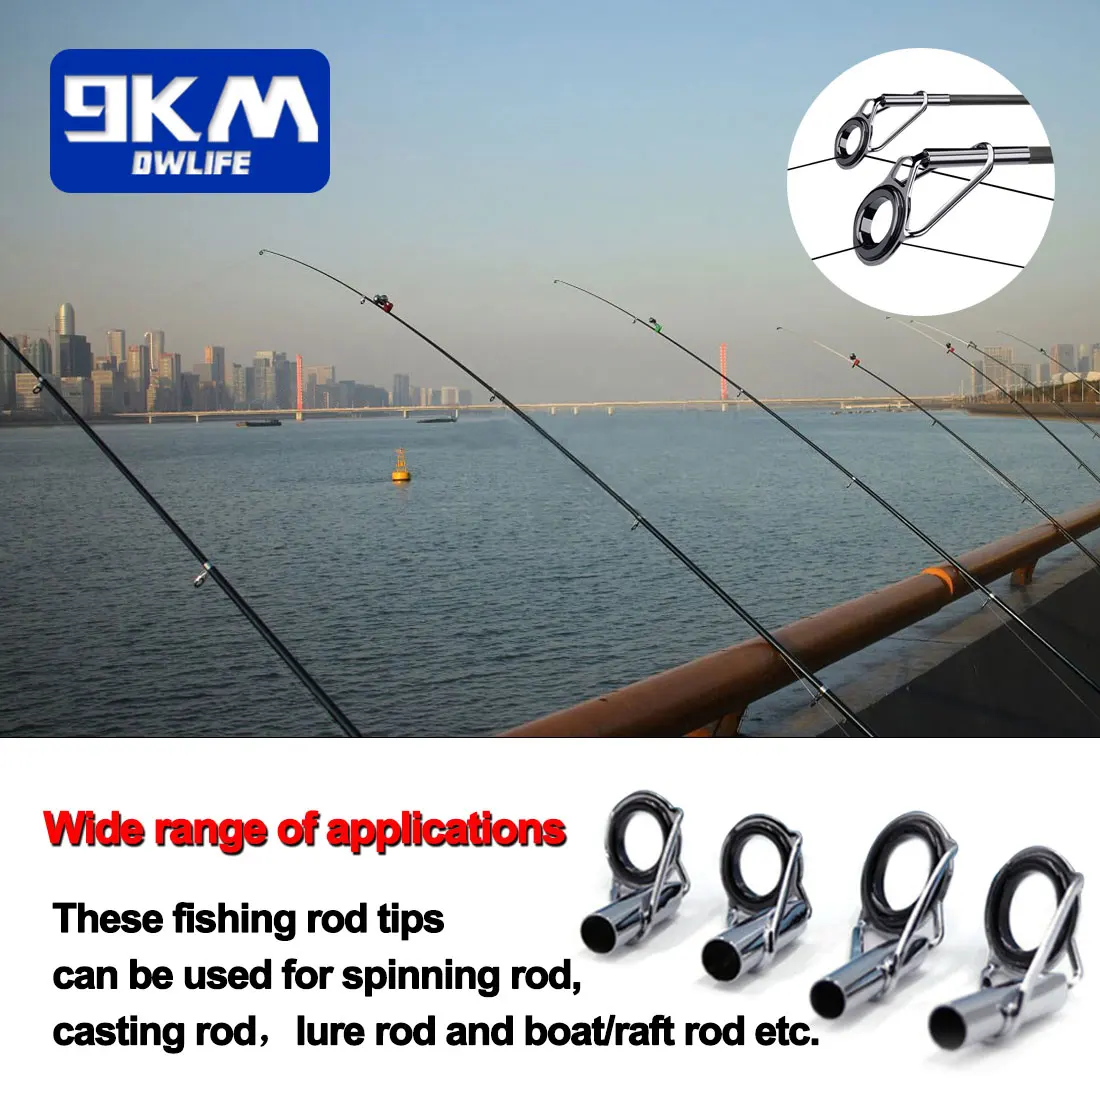 8PCS FISHING ROD Replacement Tips Stainless Steel Ceramic Ring Guide  Fishing Kit £4.22 - PicClick UK